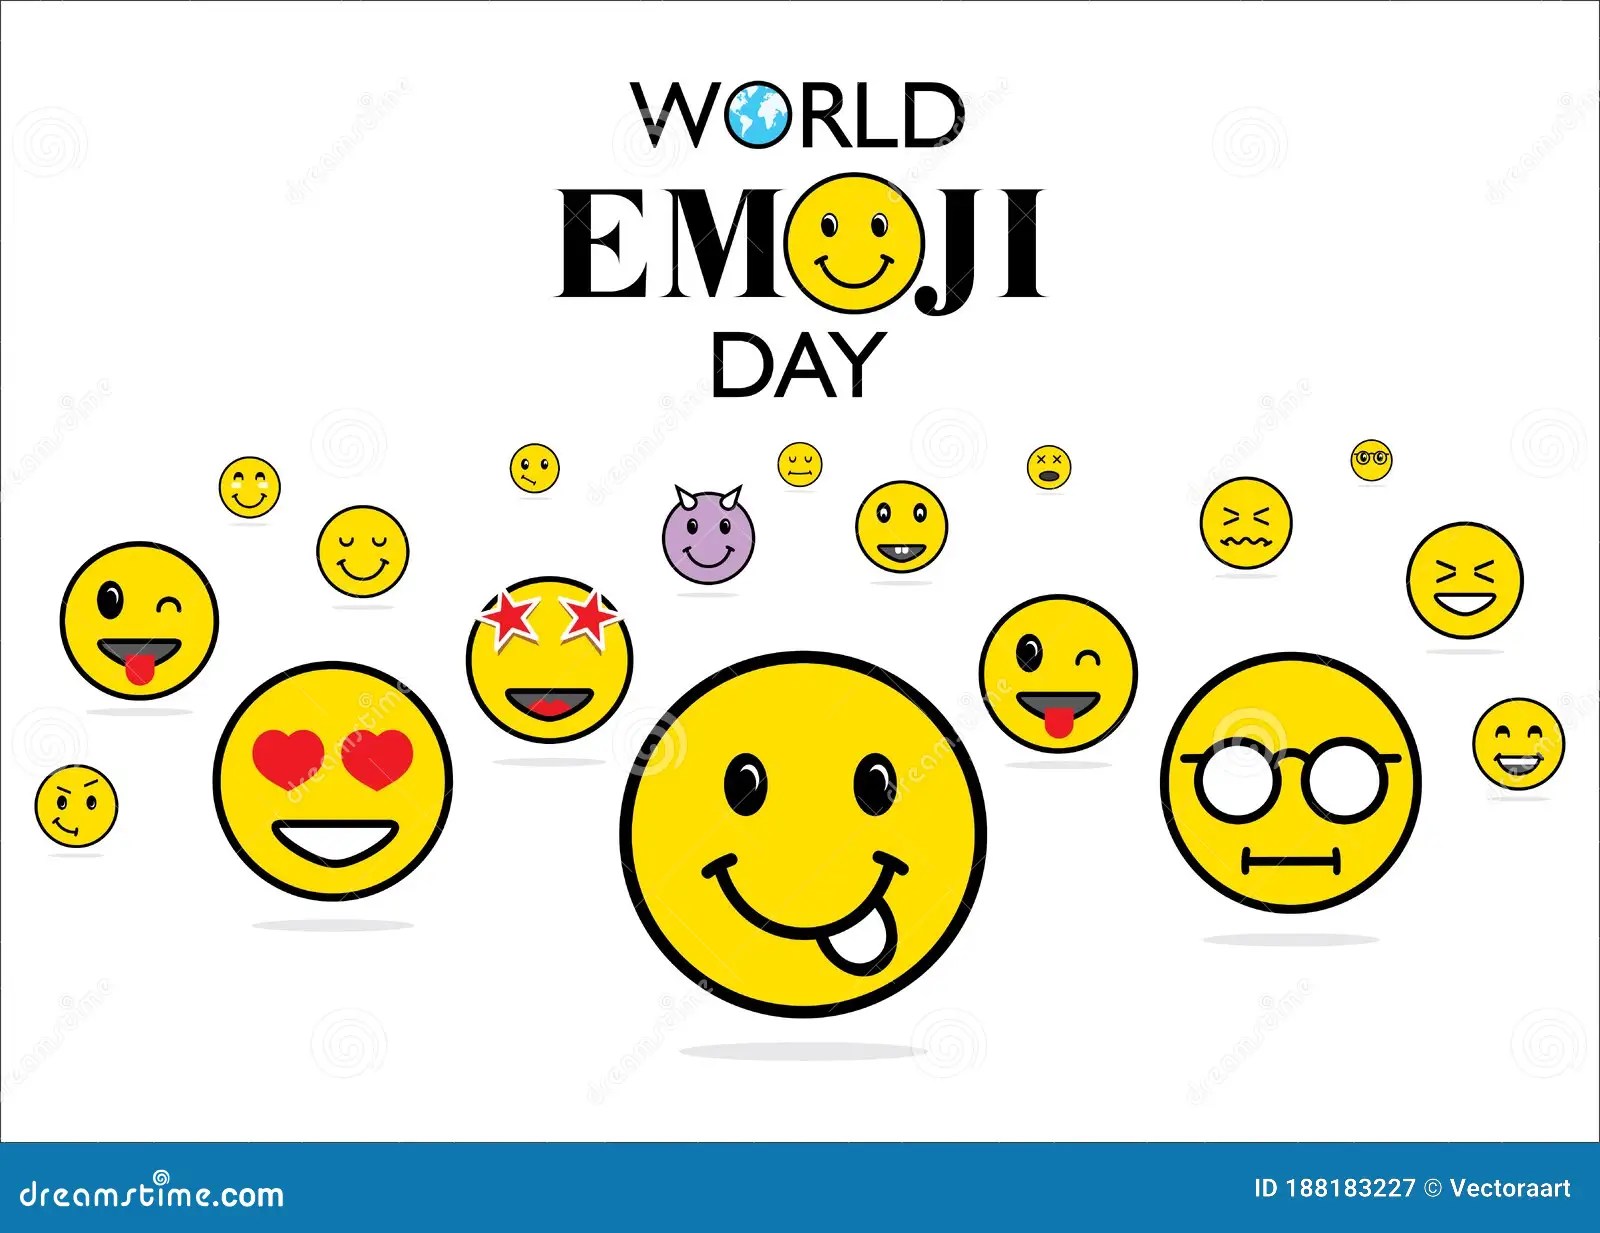 World Emoji Day Drawing Emoji Day Poster How To Draw World Emoji Day